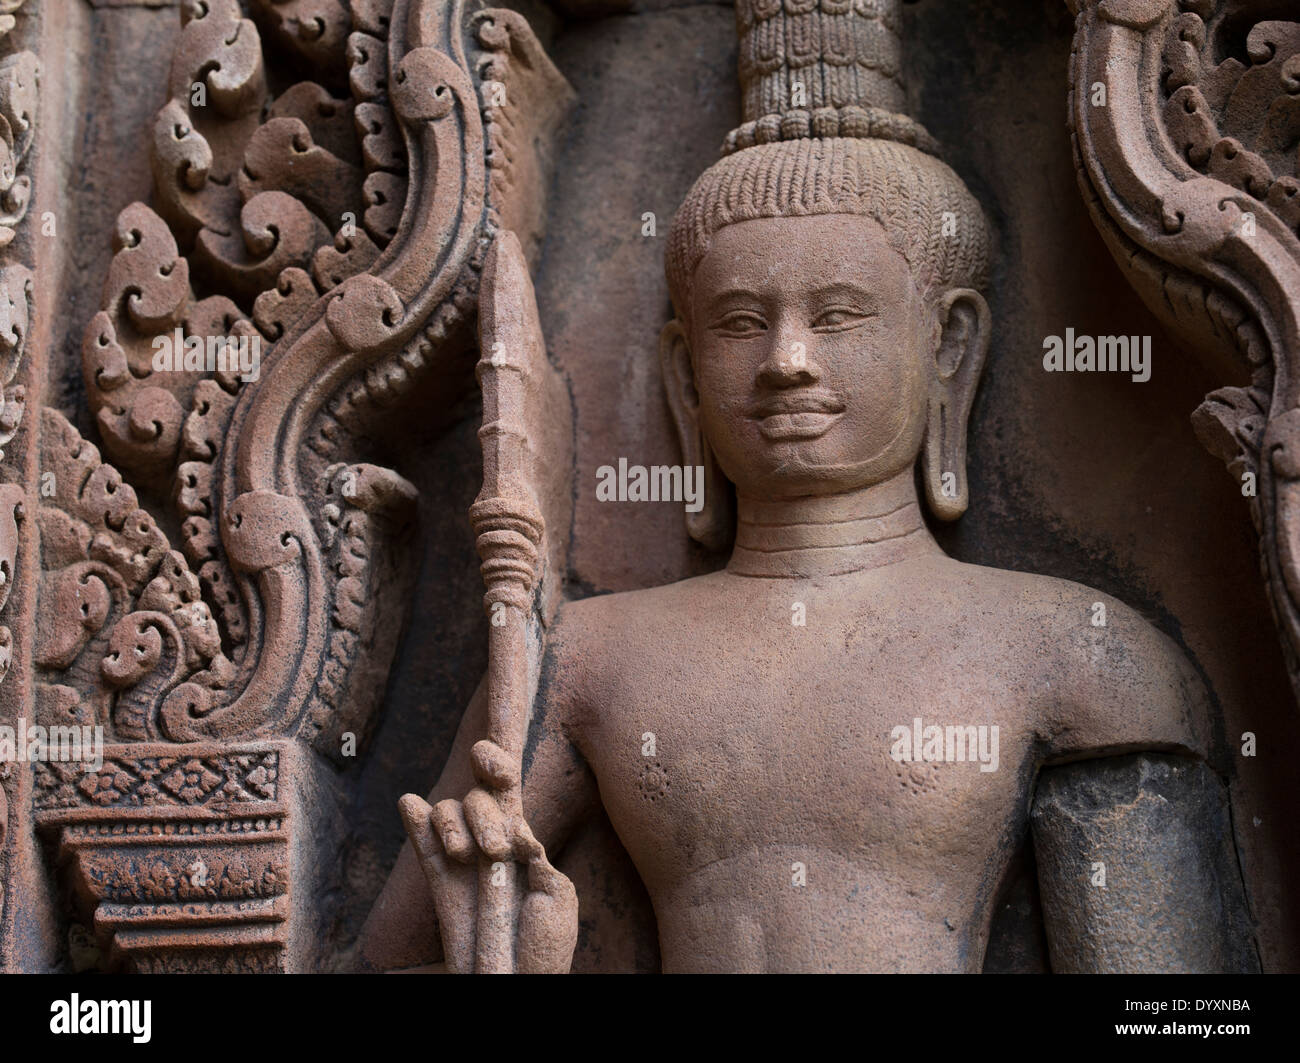 Banteay Srei Hindu Temple dedicated to Shiva. Siem Reap, Cambodia Stock Photo